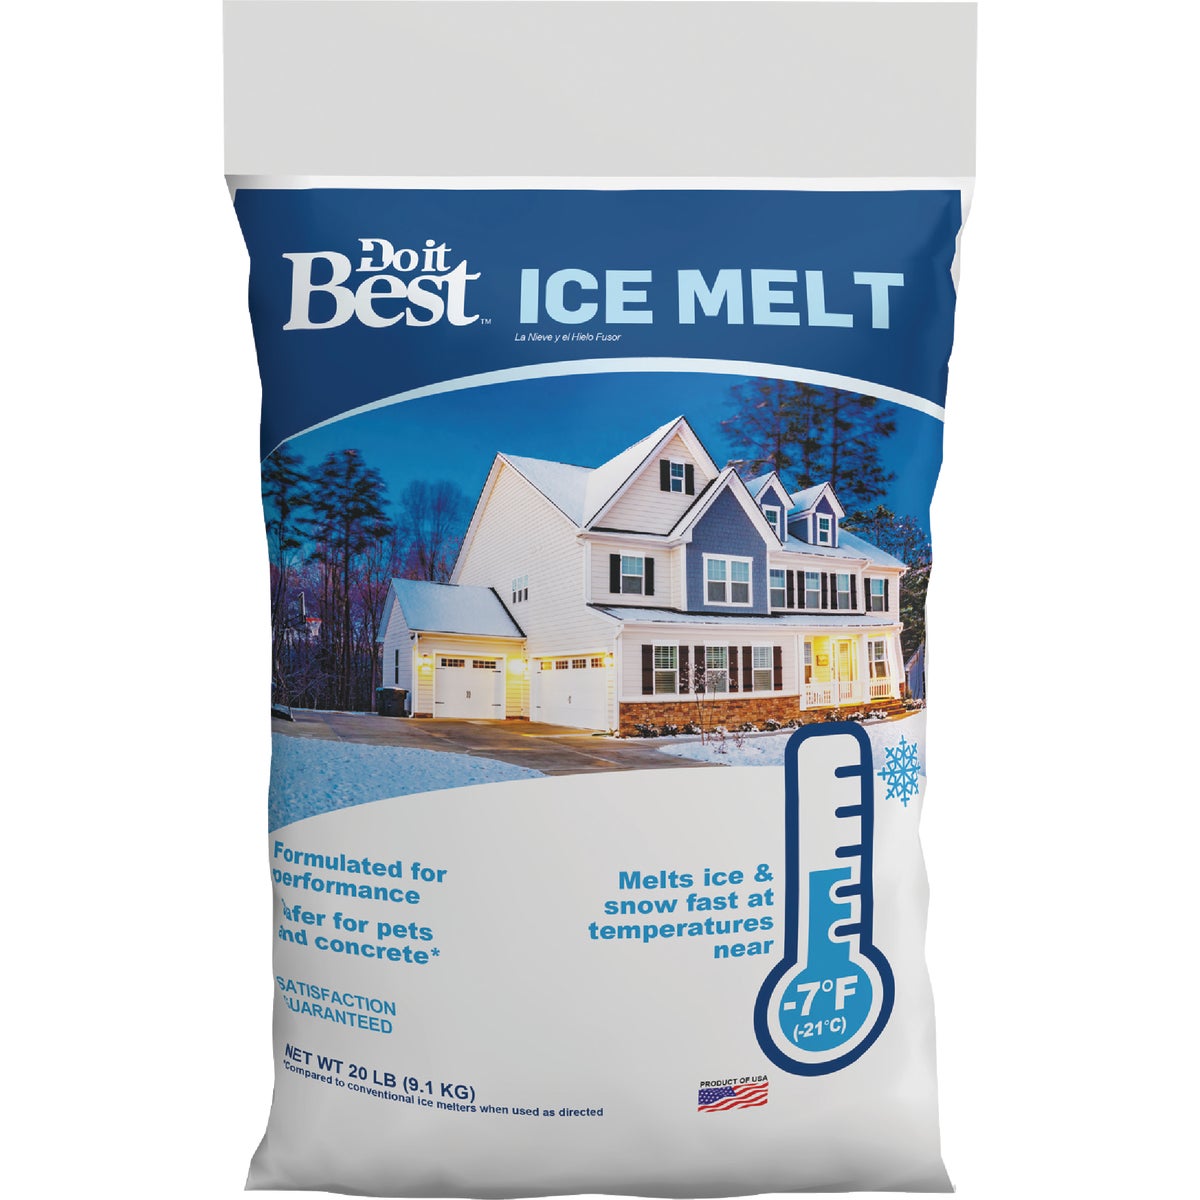 Item 740906, Ice melt ideal for de-icing driveways, sidewalks, steps, and parking lots.